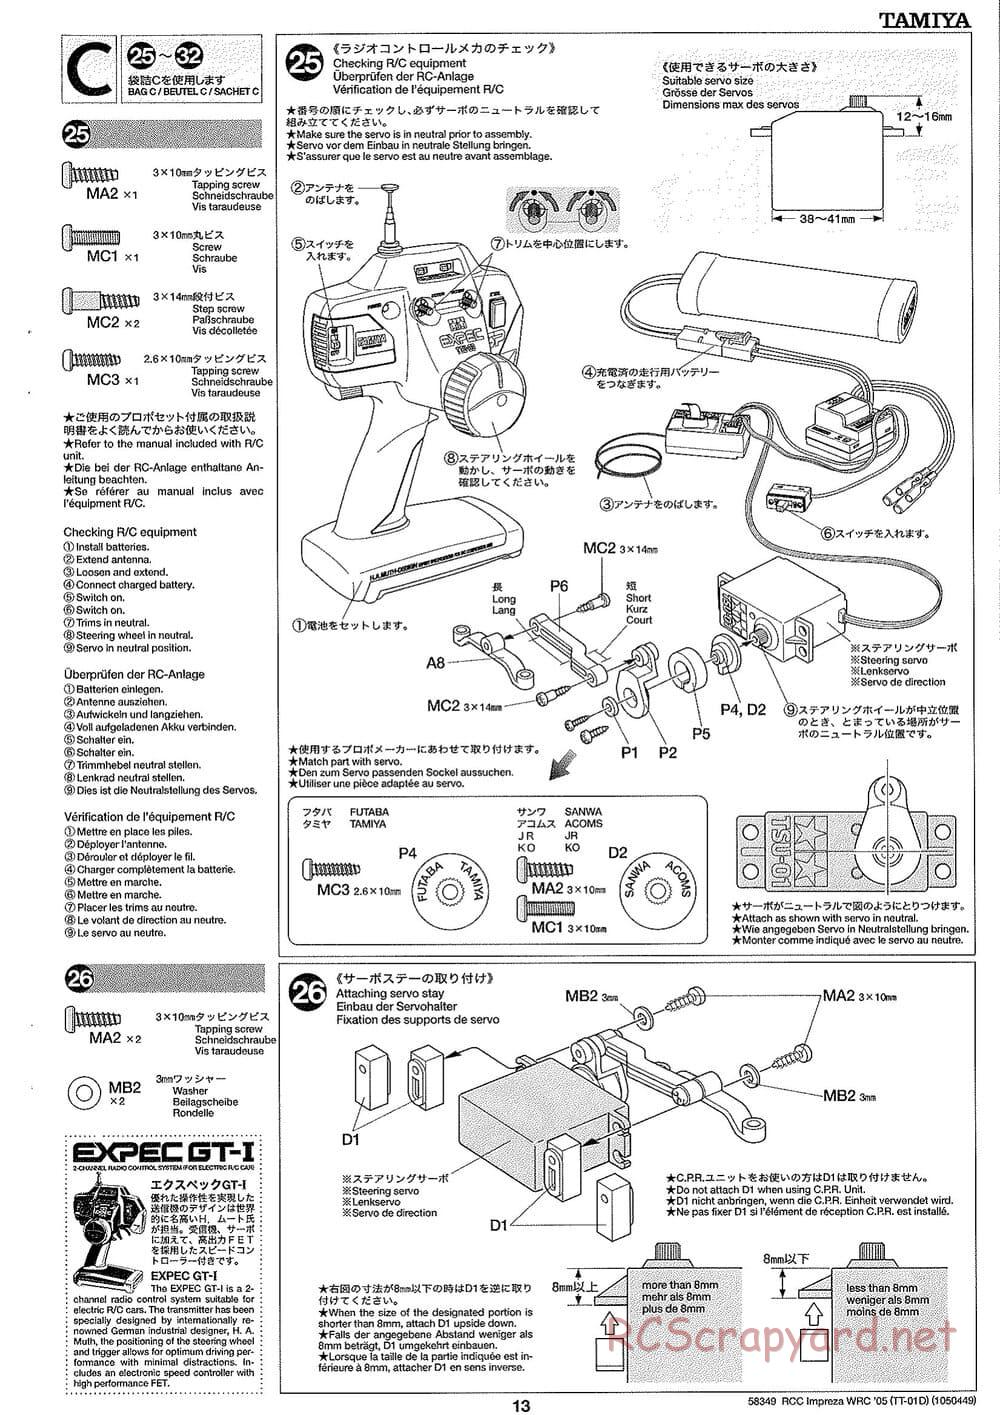 Tamiya - Subaru Impreza WRC Monte Carlo 05 - Drift Spec - TT-01D Chassis - Manual - Page 13